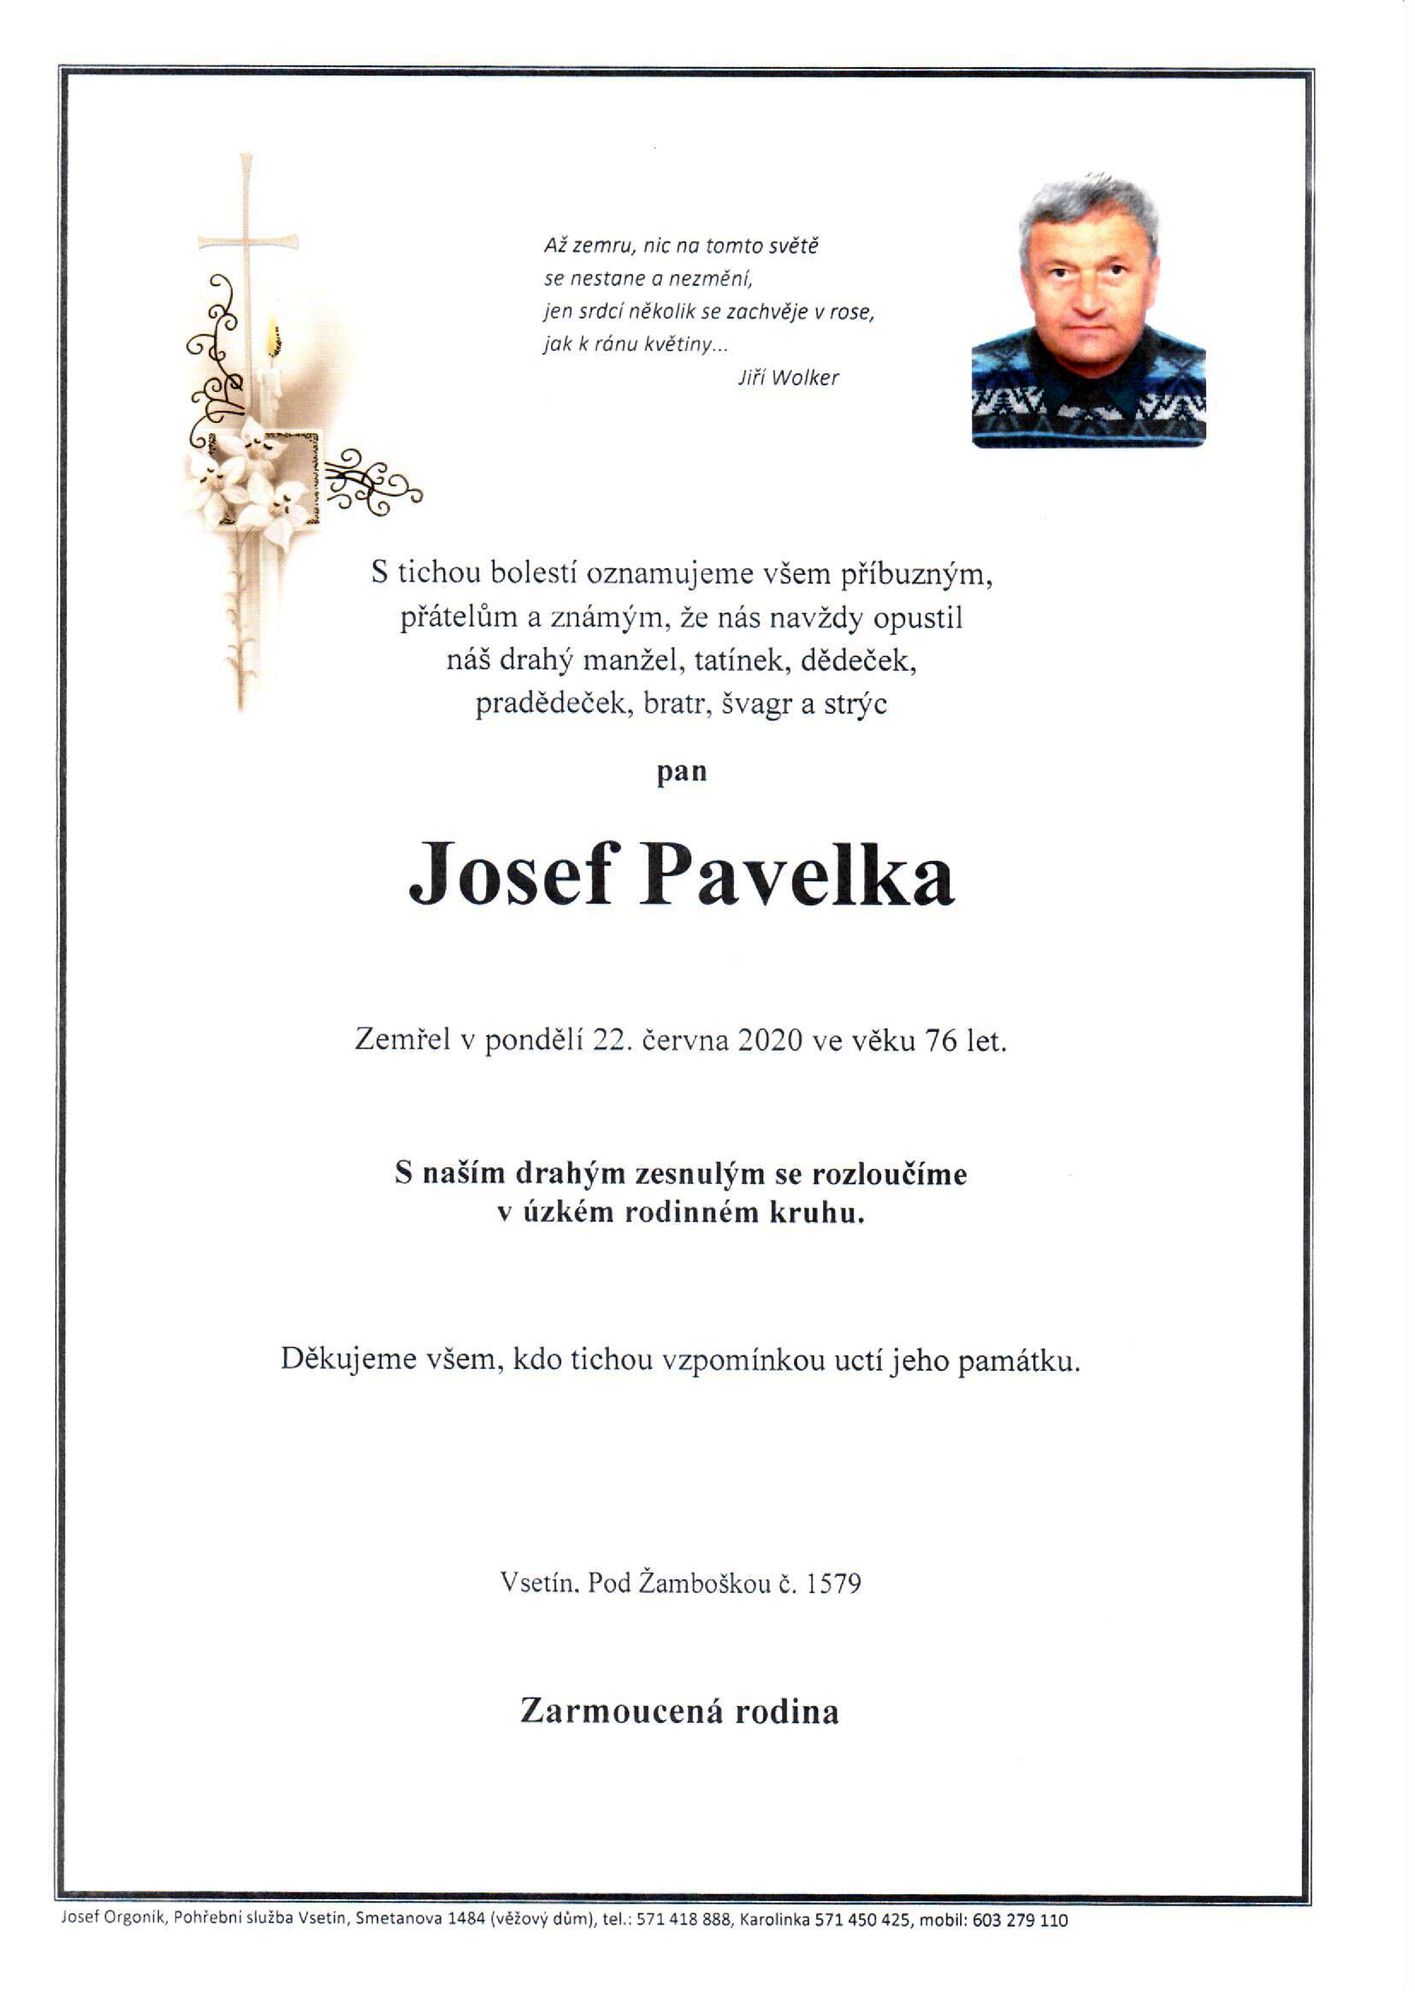 Josef Pavelka